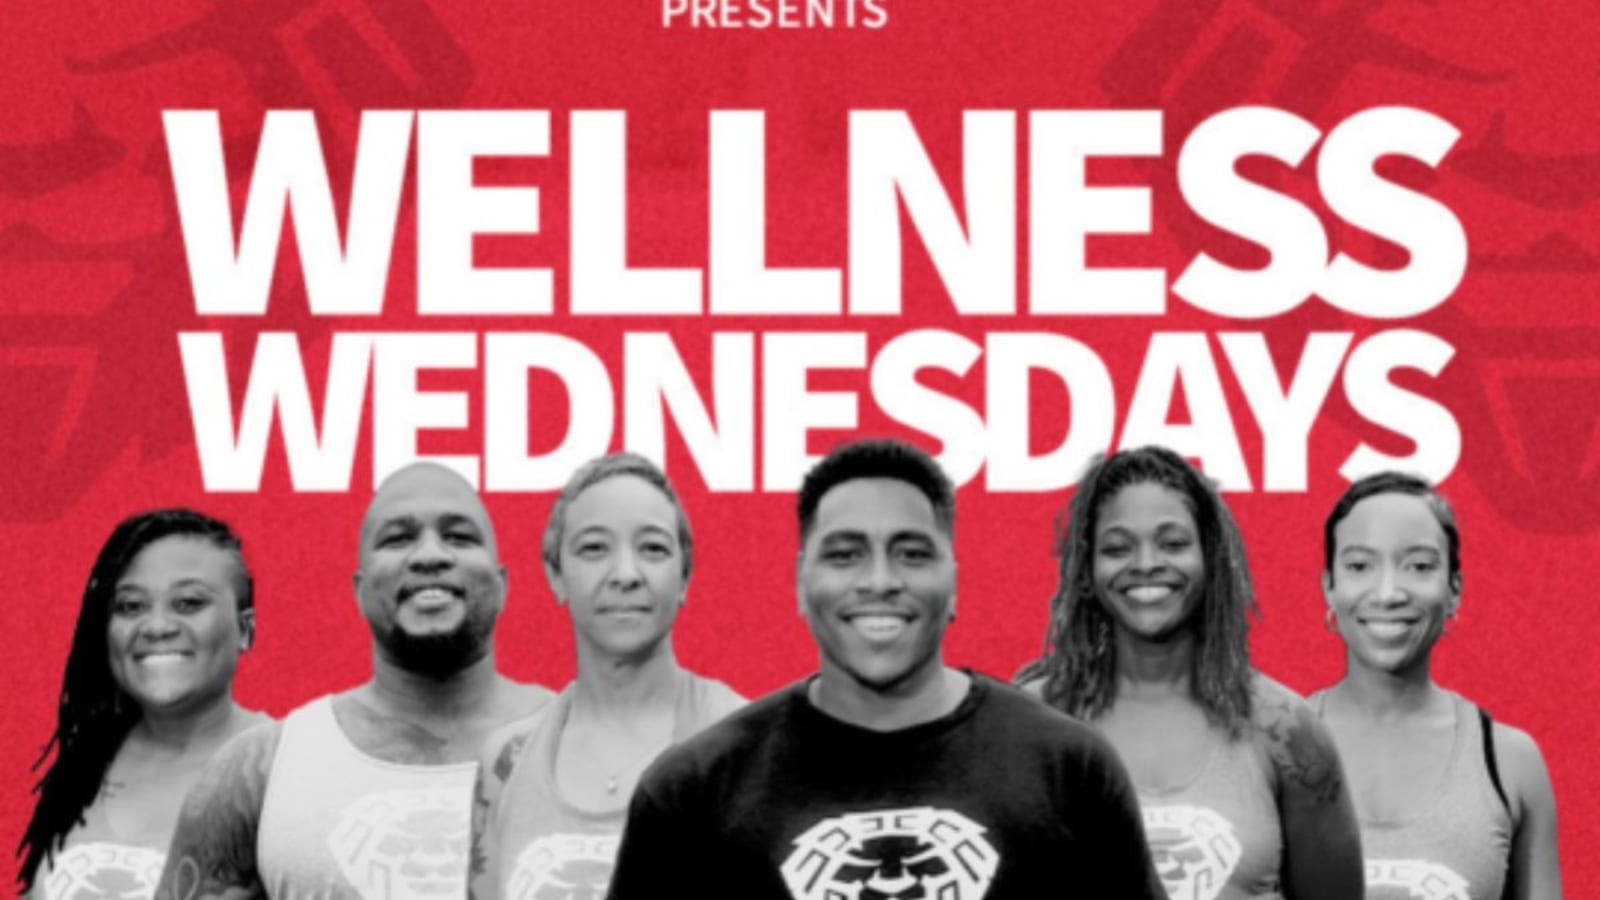 Wellness Wednesday at Atlantic Station